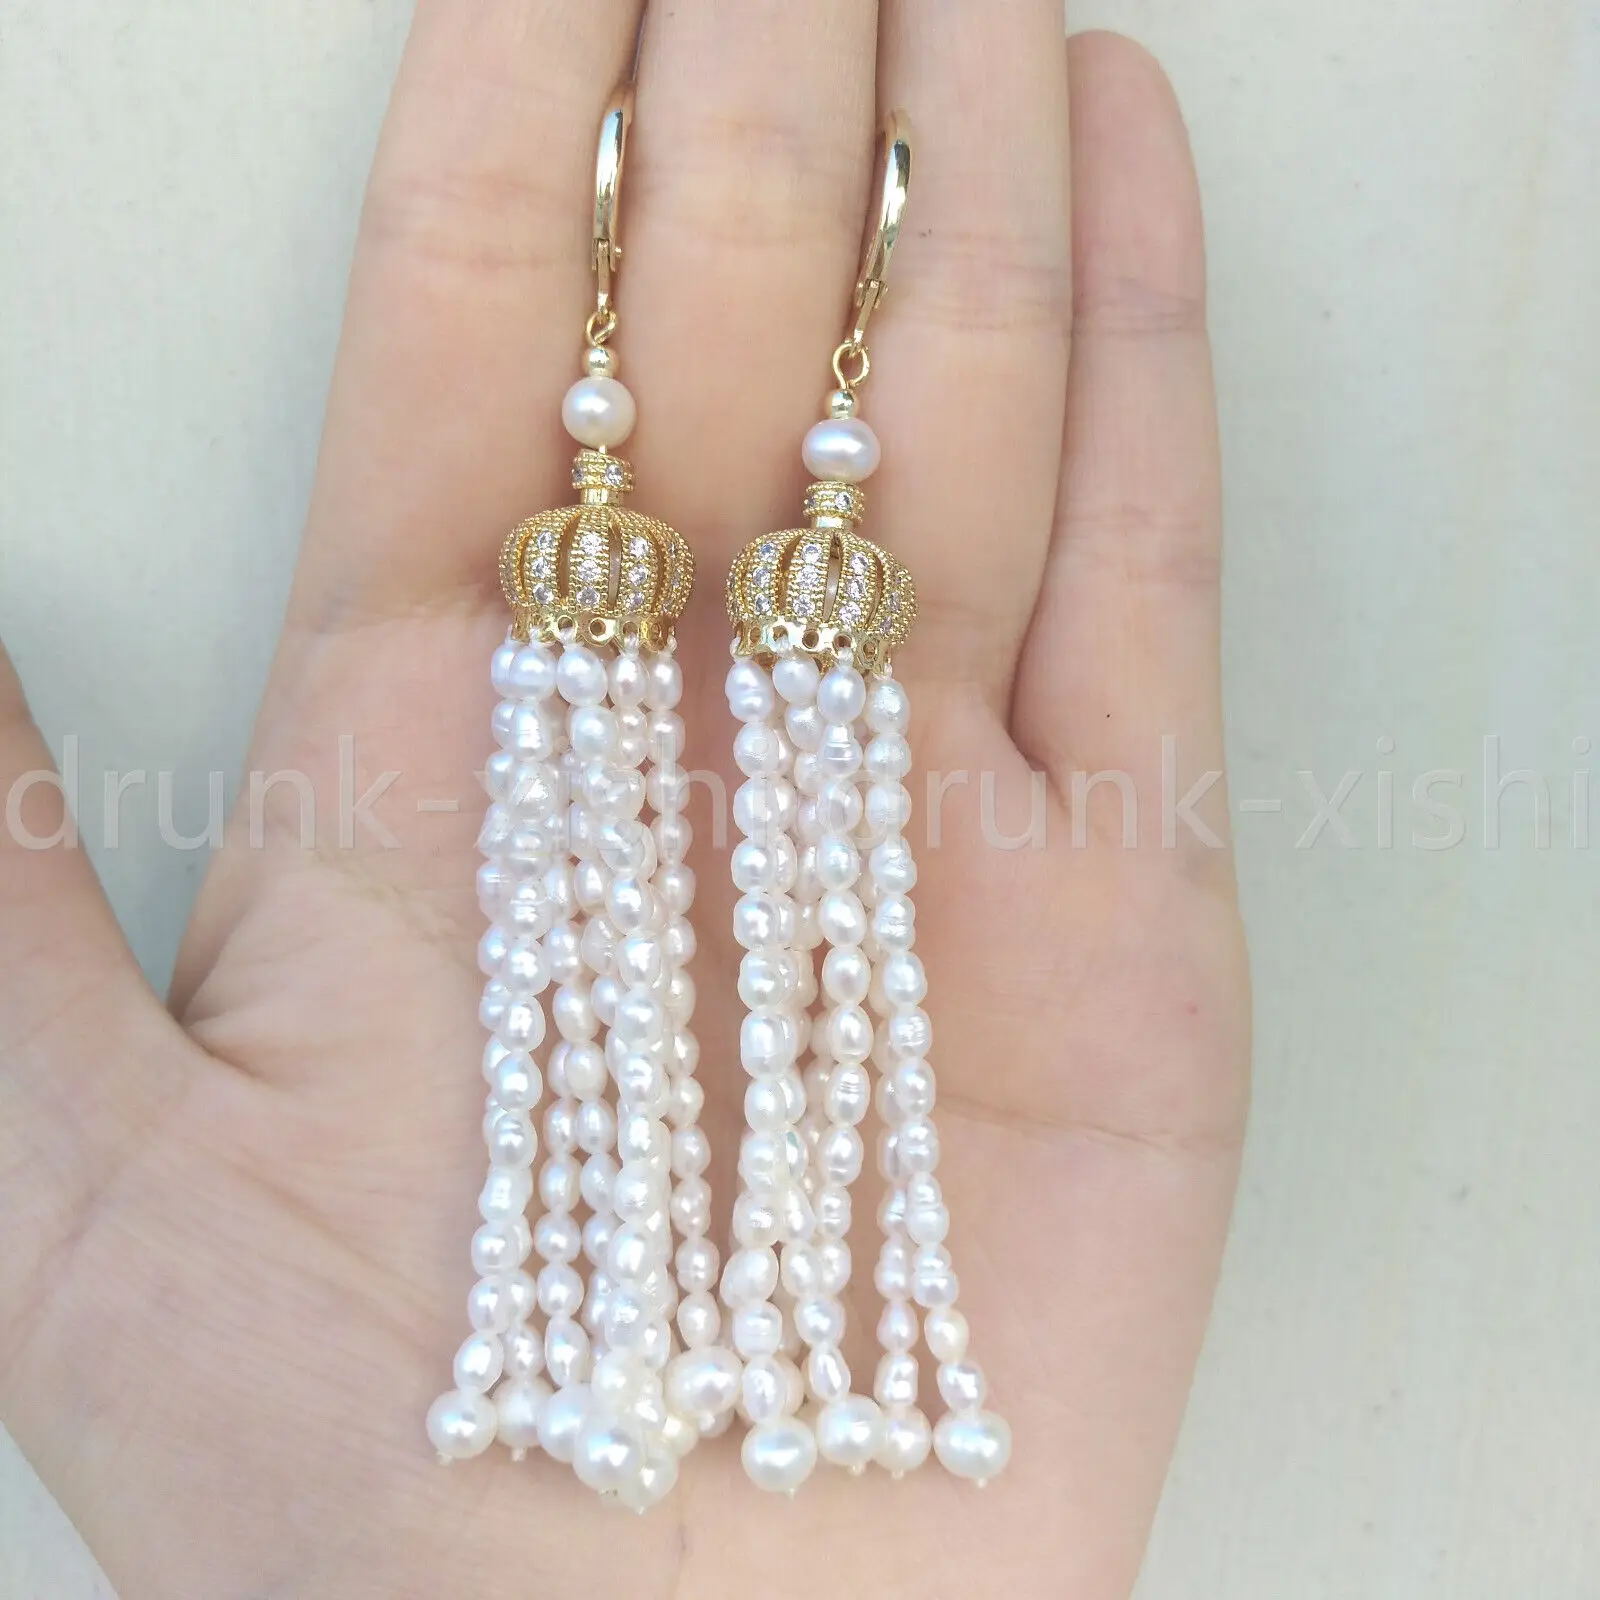 aaaa-natural-white-japanese-akoya-mini-real-pearl-tassel-crown-drop-dangle-leverback-earrings-filled-14k-gold-free-shipping